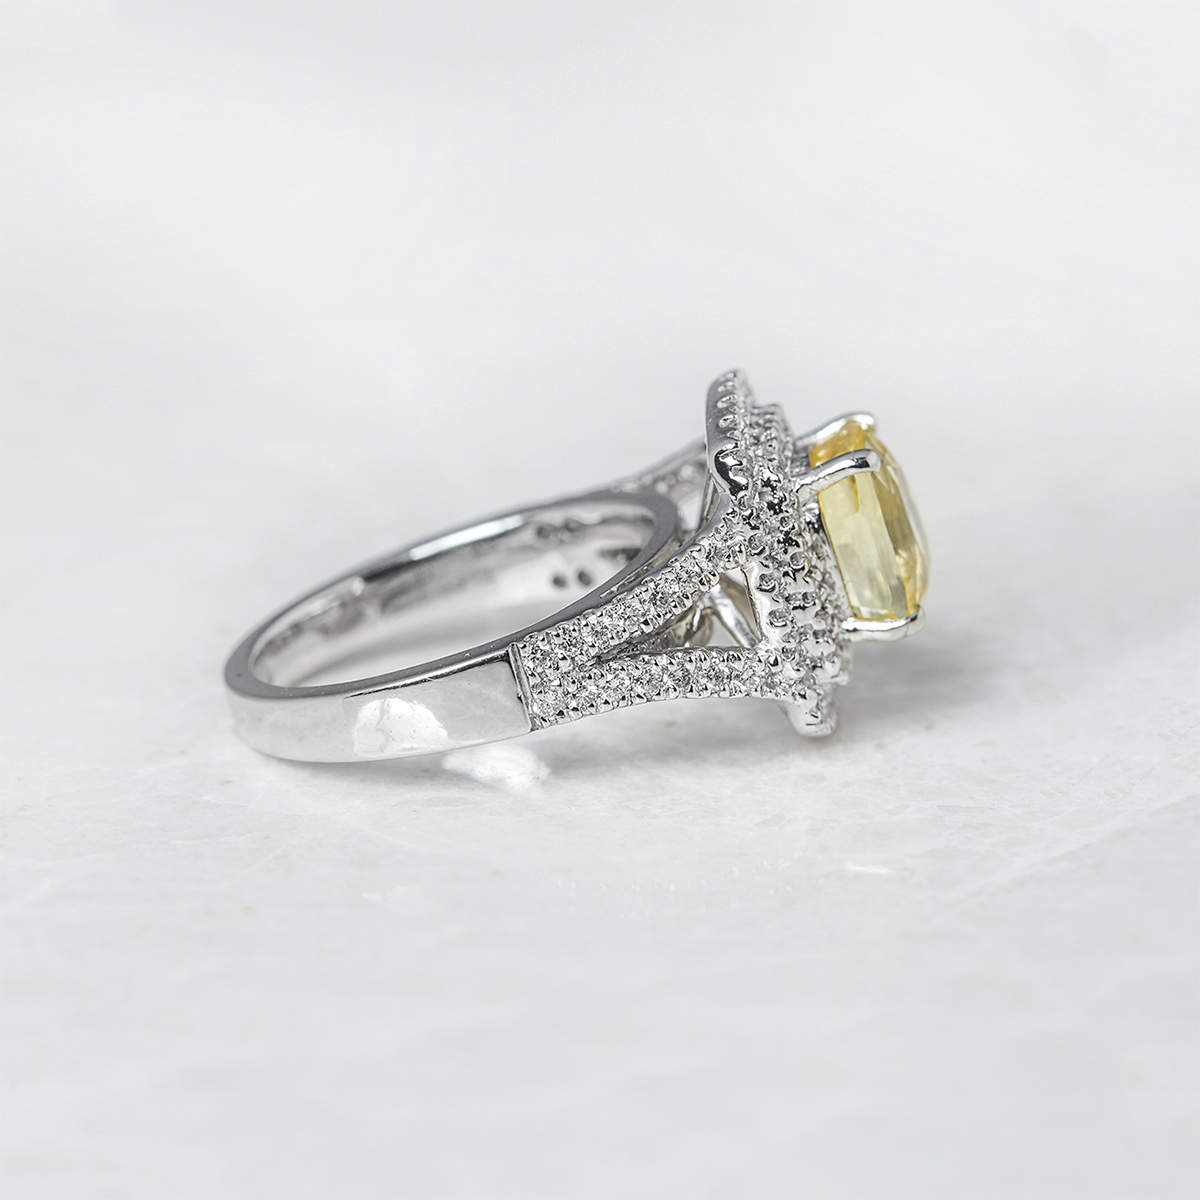 Unbranded, Platinum Cushion Cut 3.56ct Yellow Sapphire & 0.85ct Diamond Ring - Image 2 of 5